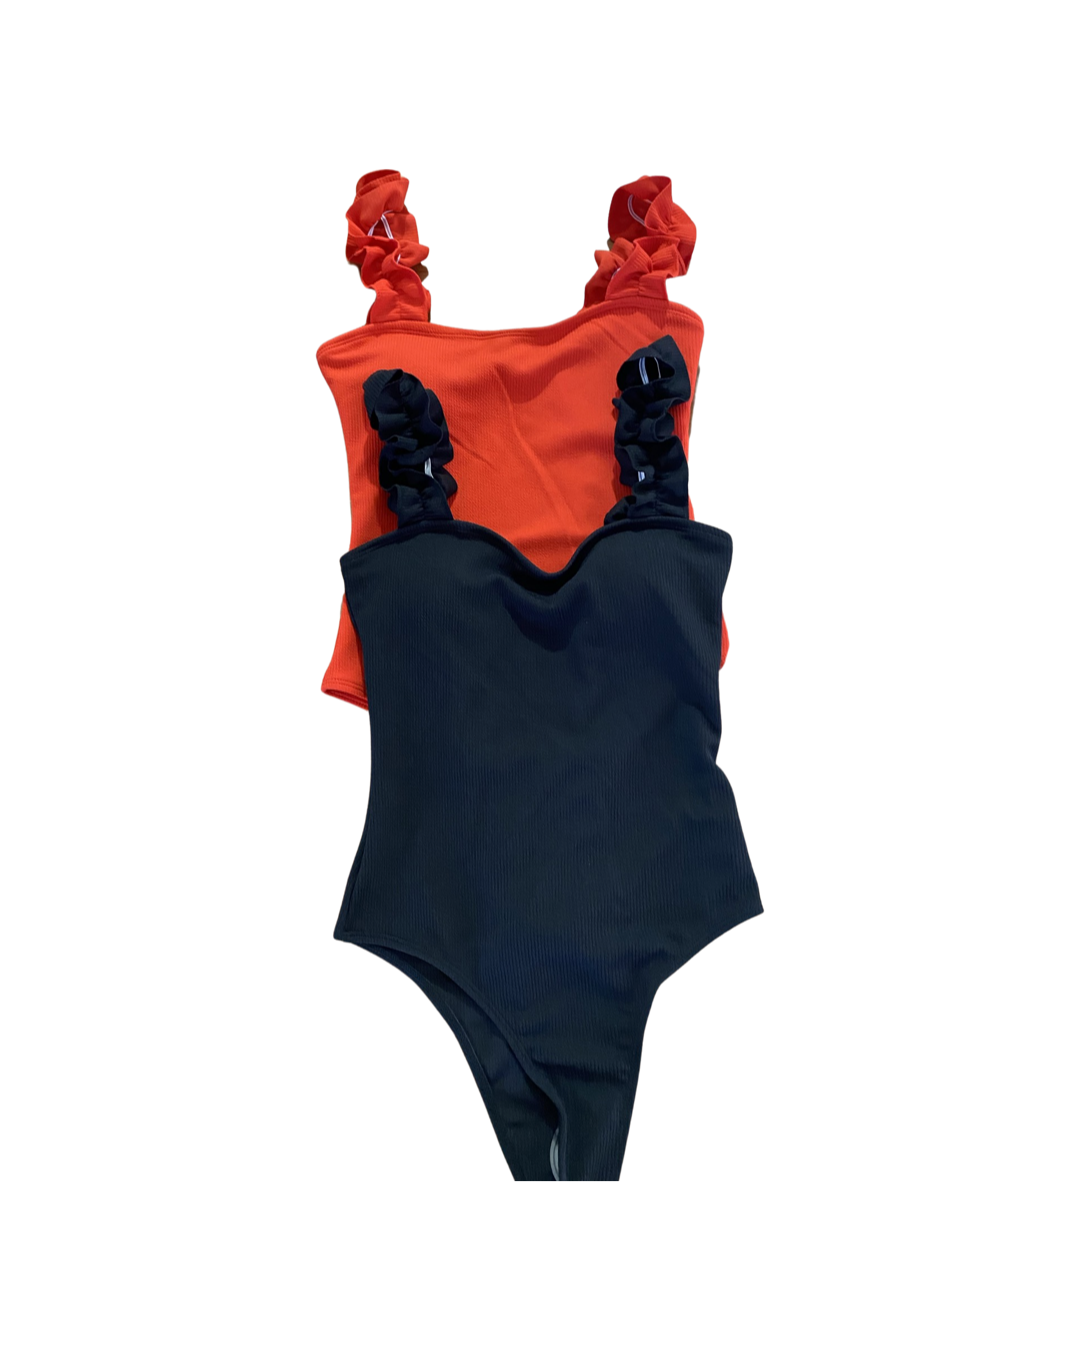 Ruffle strap bodysuit or swimsuit